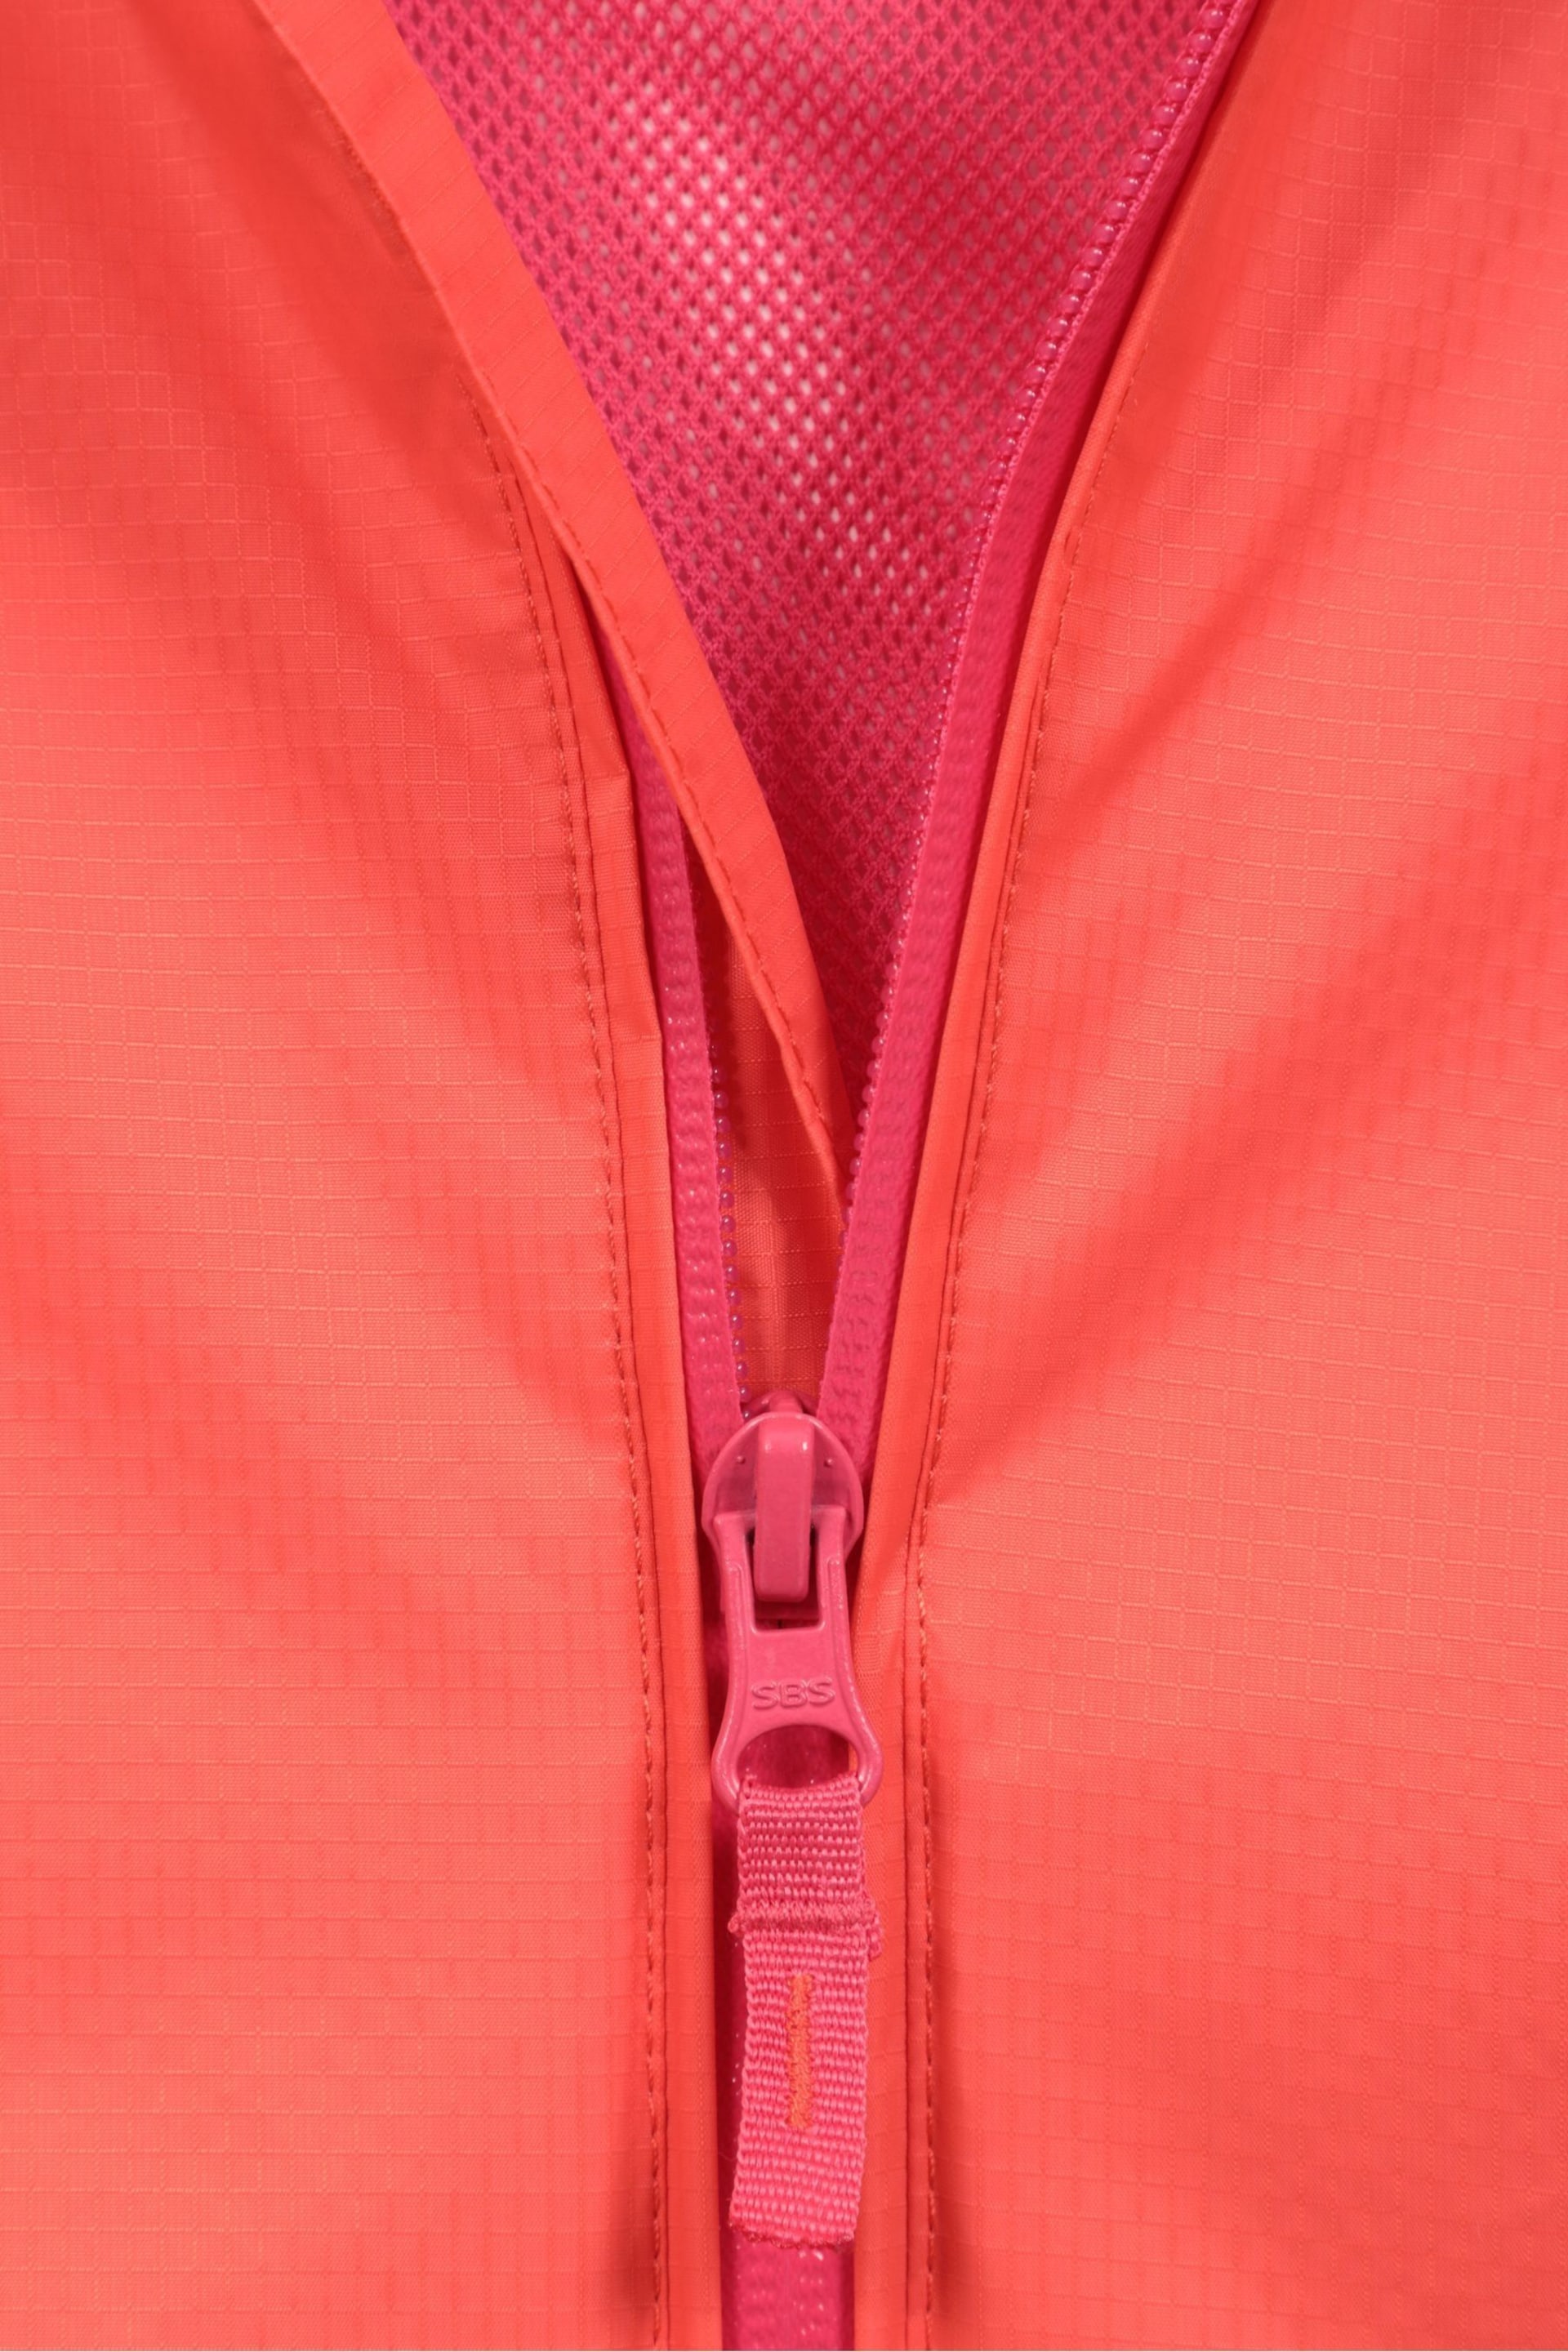 Mountain Warehouse Pink Torrent Kids Waterproof Jacket - Image 5 of 5